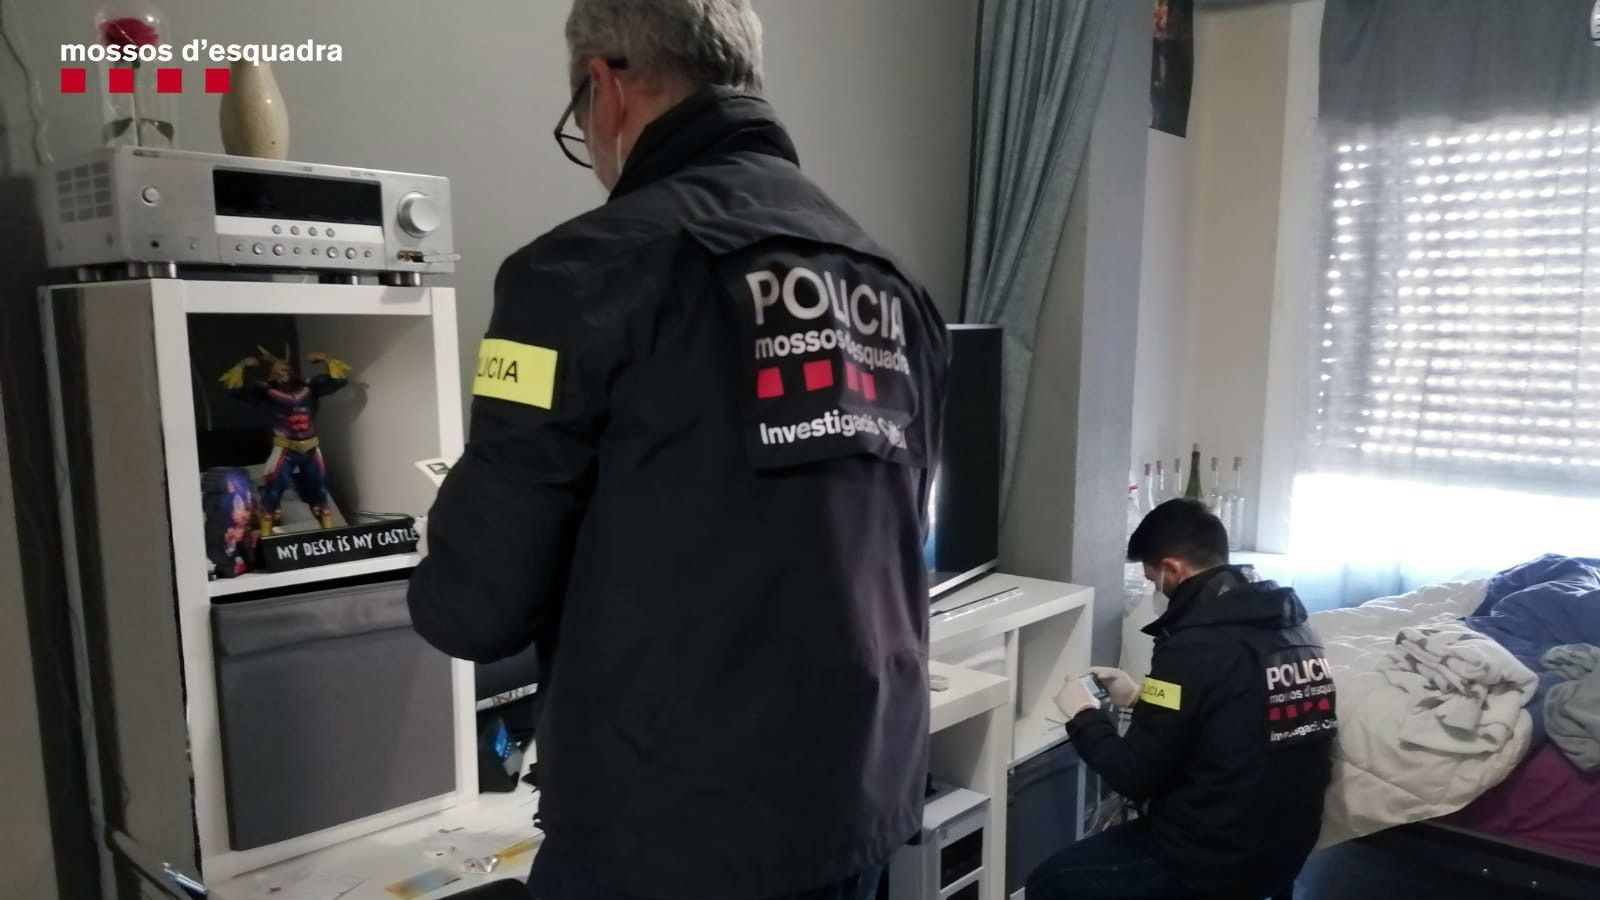 La policía investiga la casa del pedófilo detenido / MOSSOS D'ESQUADRA